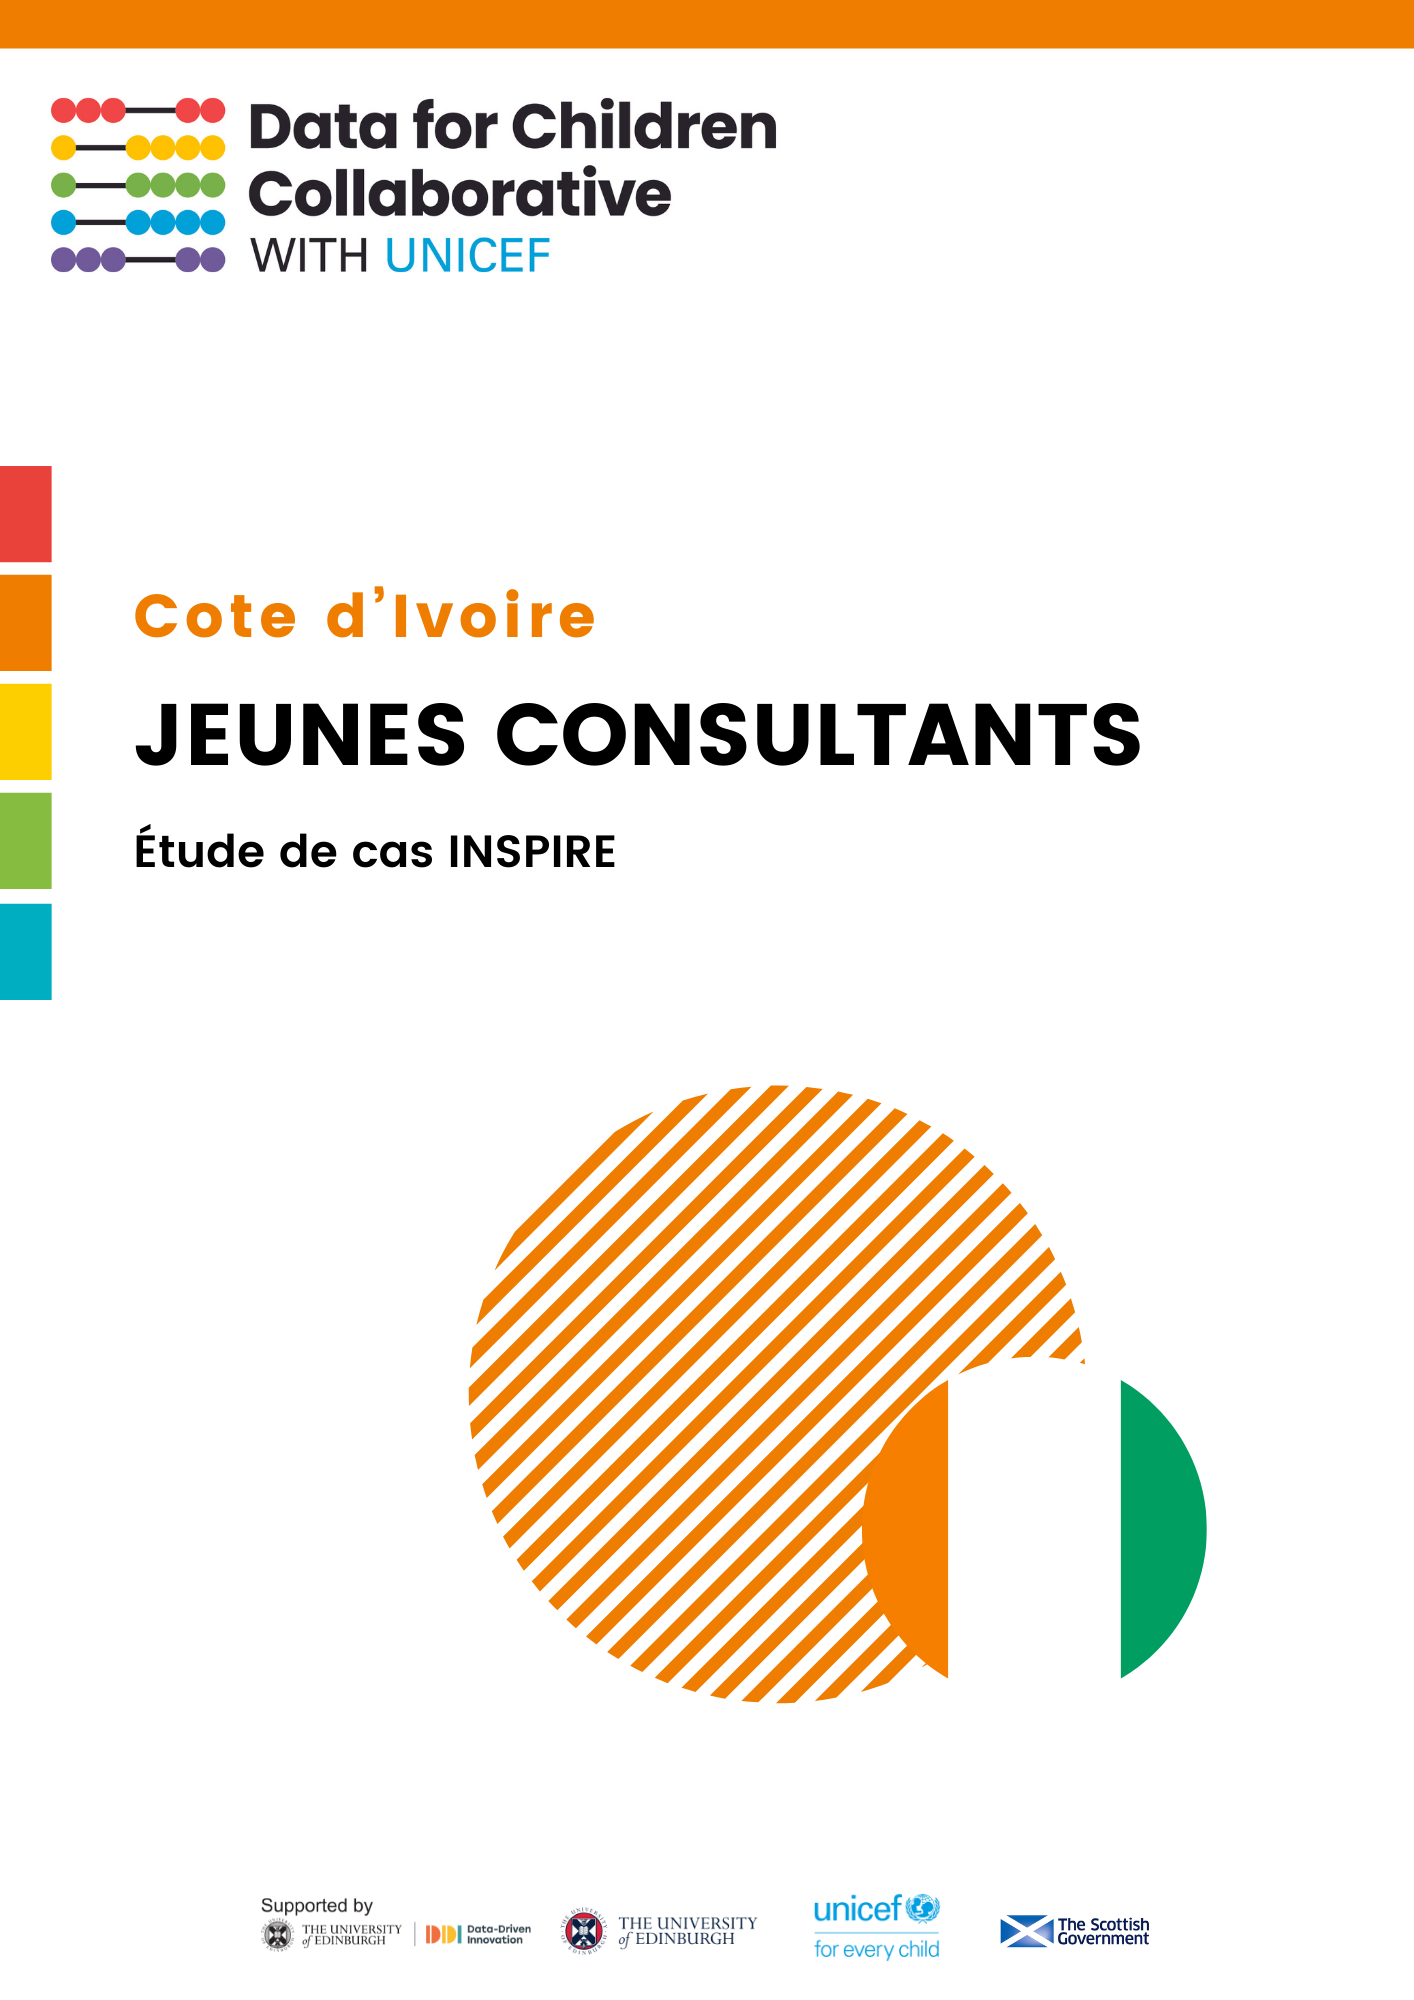 Cote d'Ivoire YPA Case Study (French Translation) (Copy)